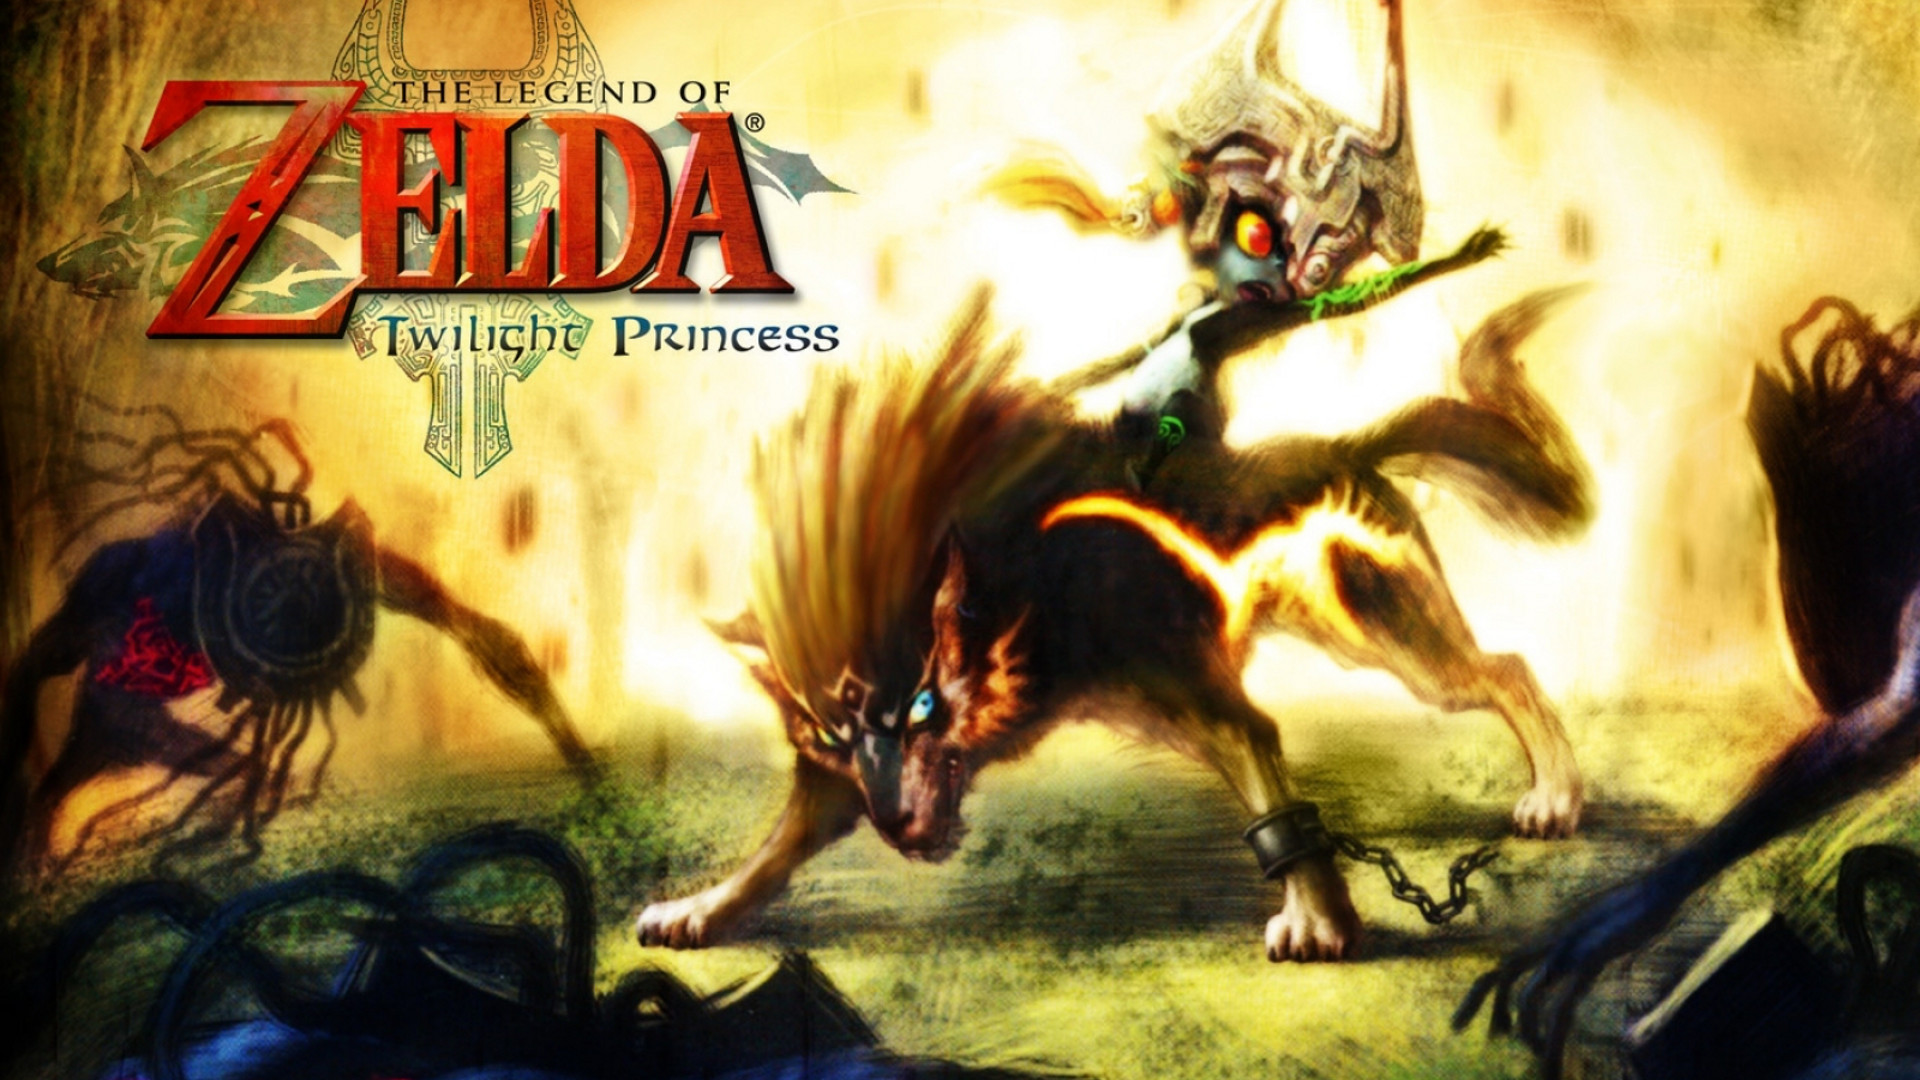 1920x1080 The Legend Of Zelda Twilight Princess Wallpaper Download Free.